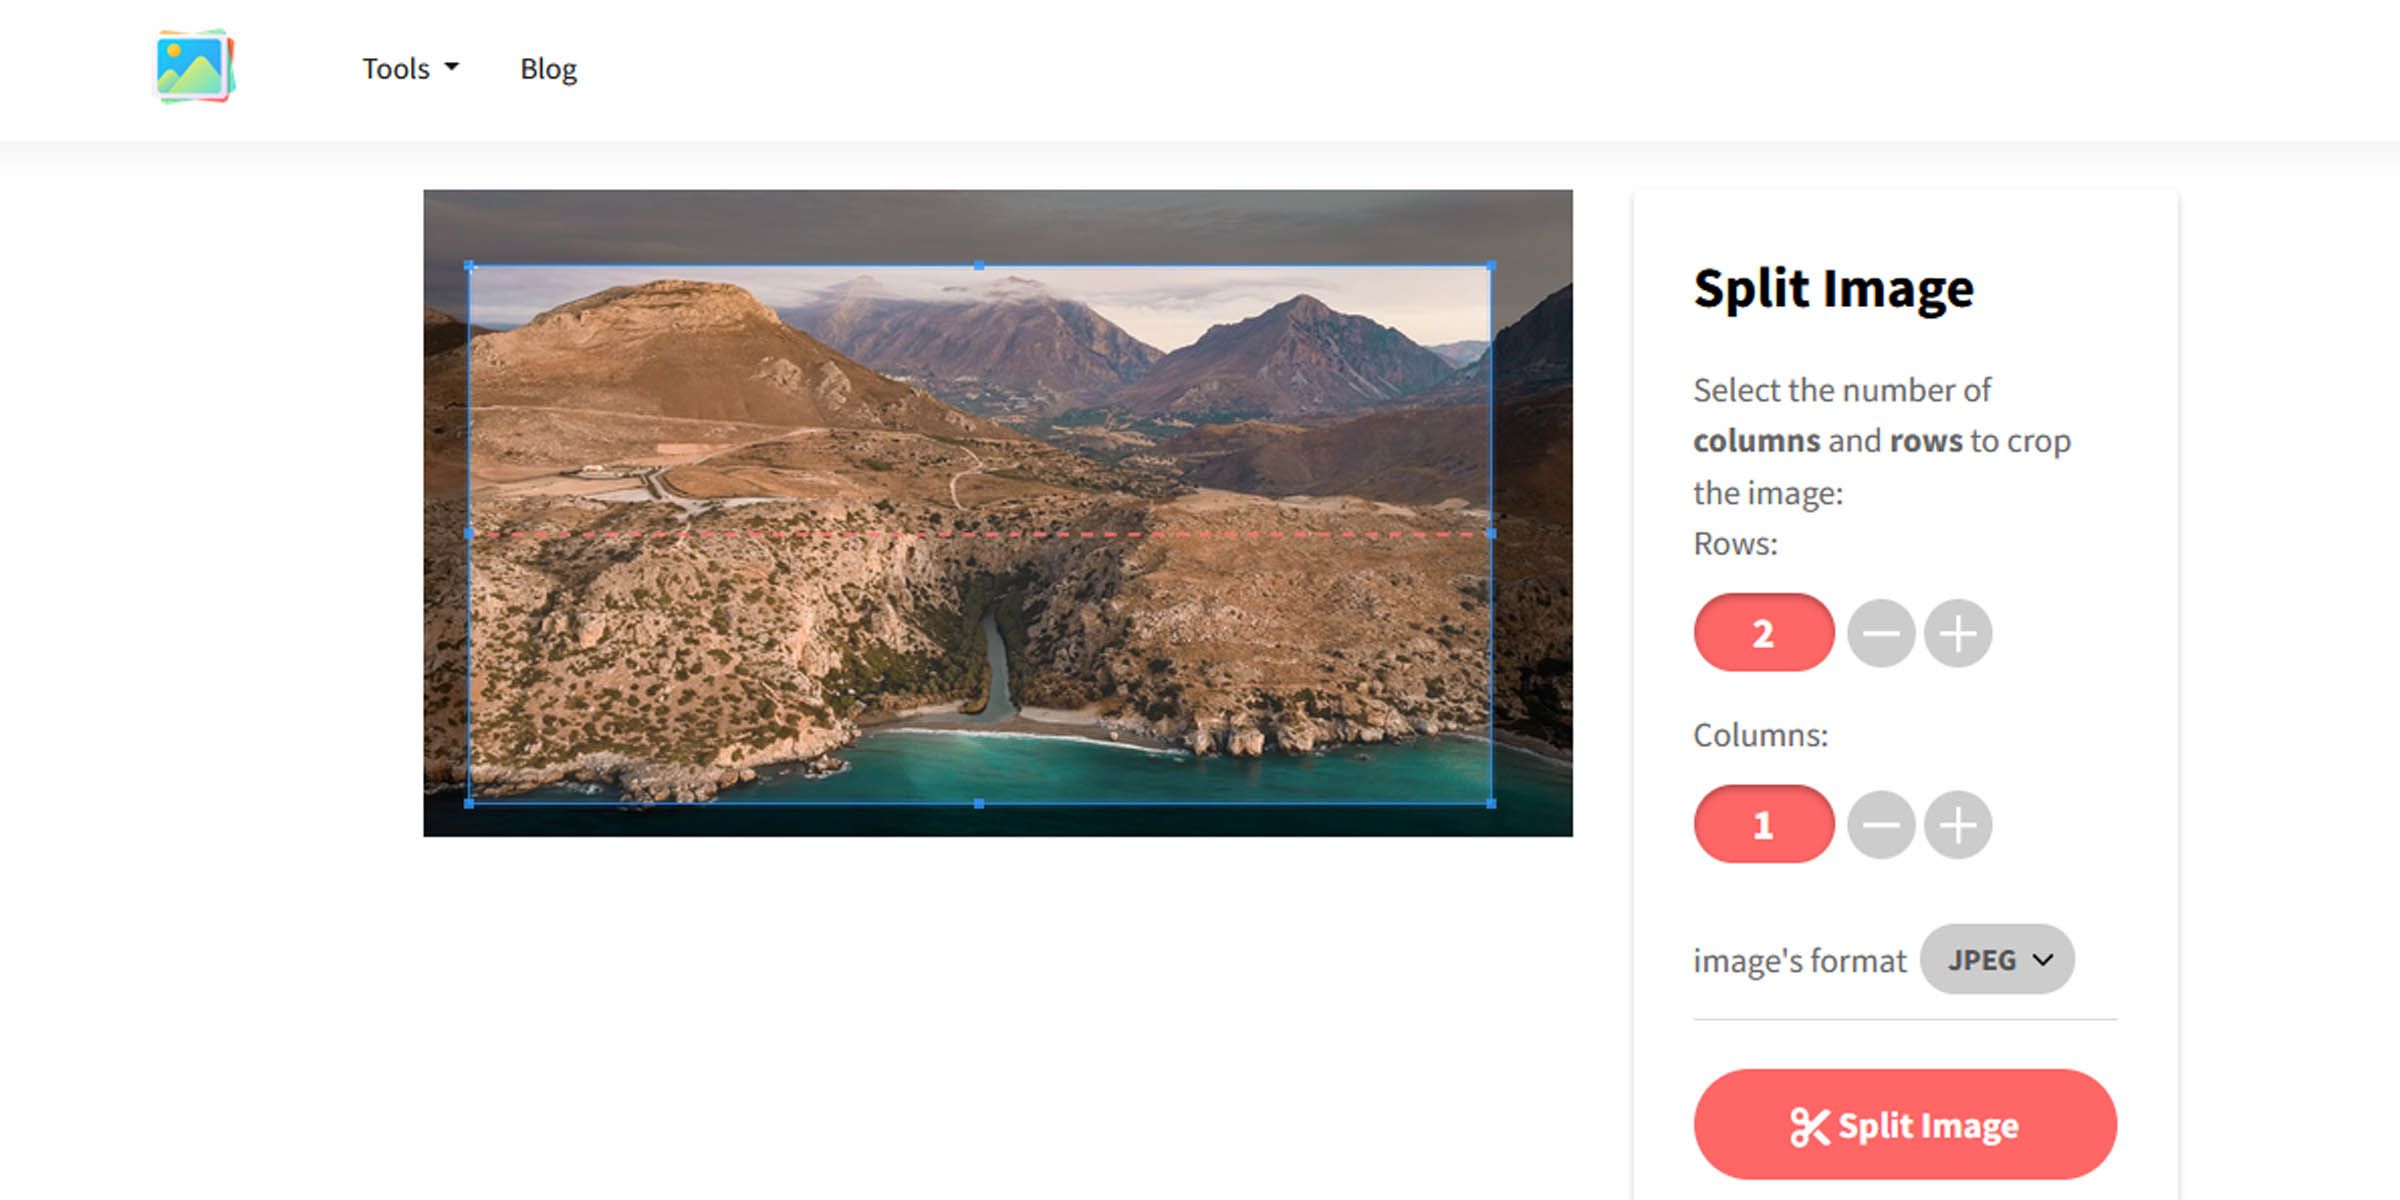 Aspose's split image tool